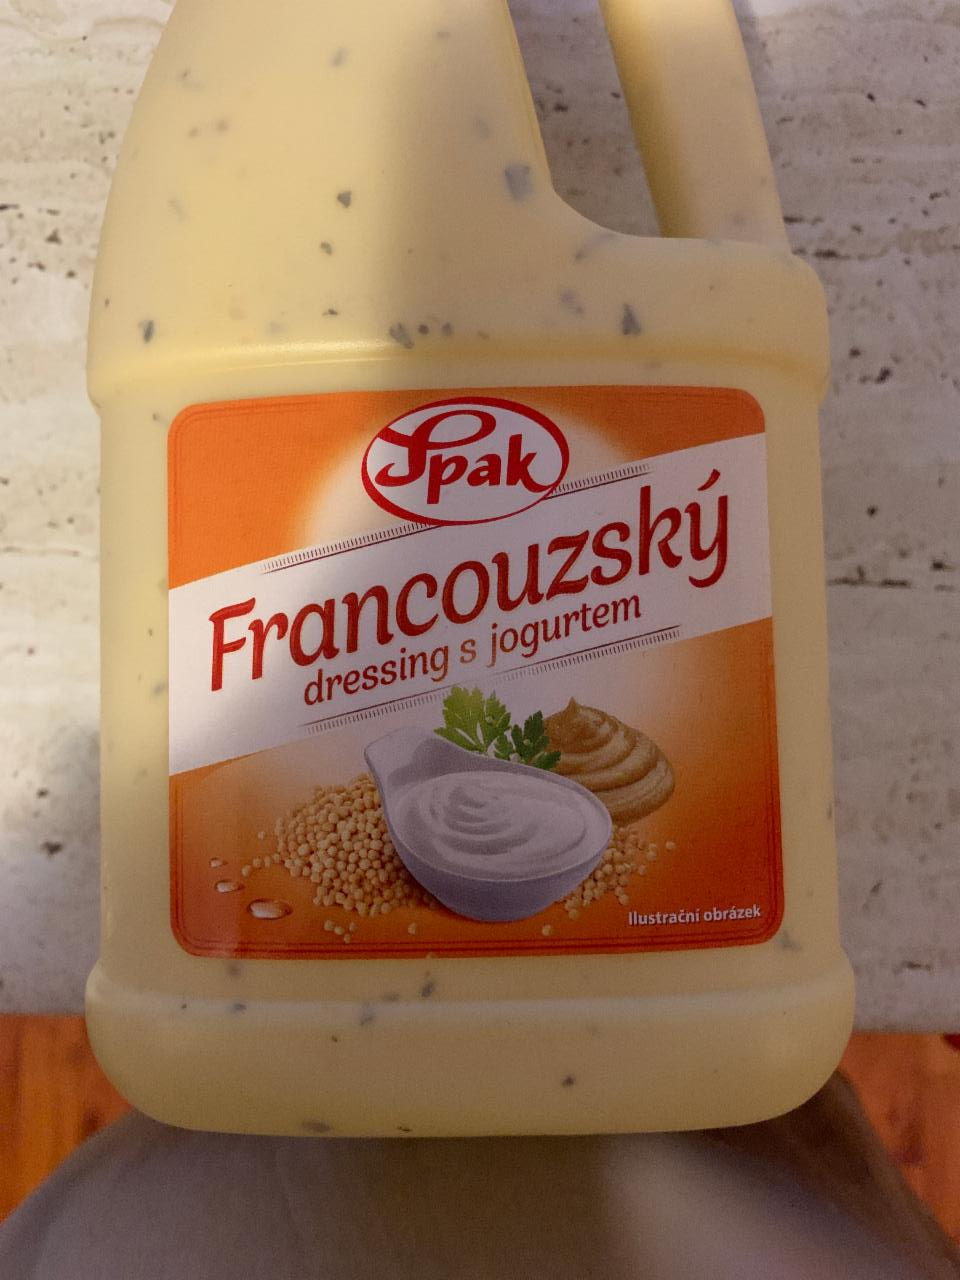 Fotografie - Francouzský dressing s jogurtem Spak